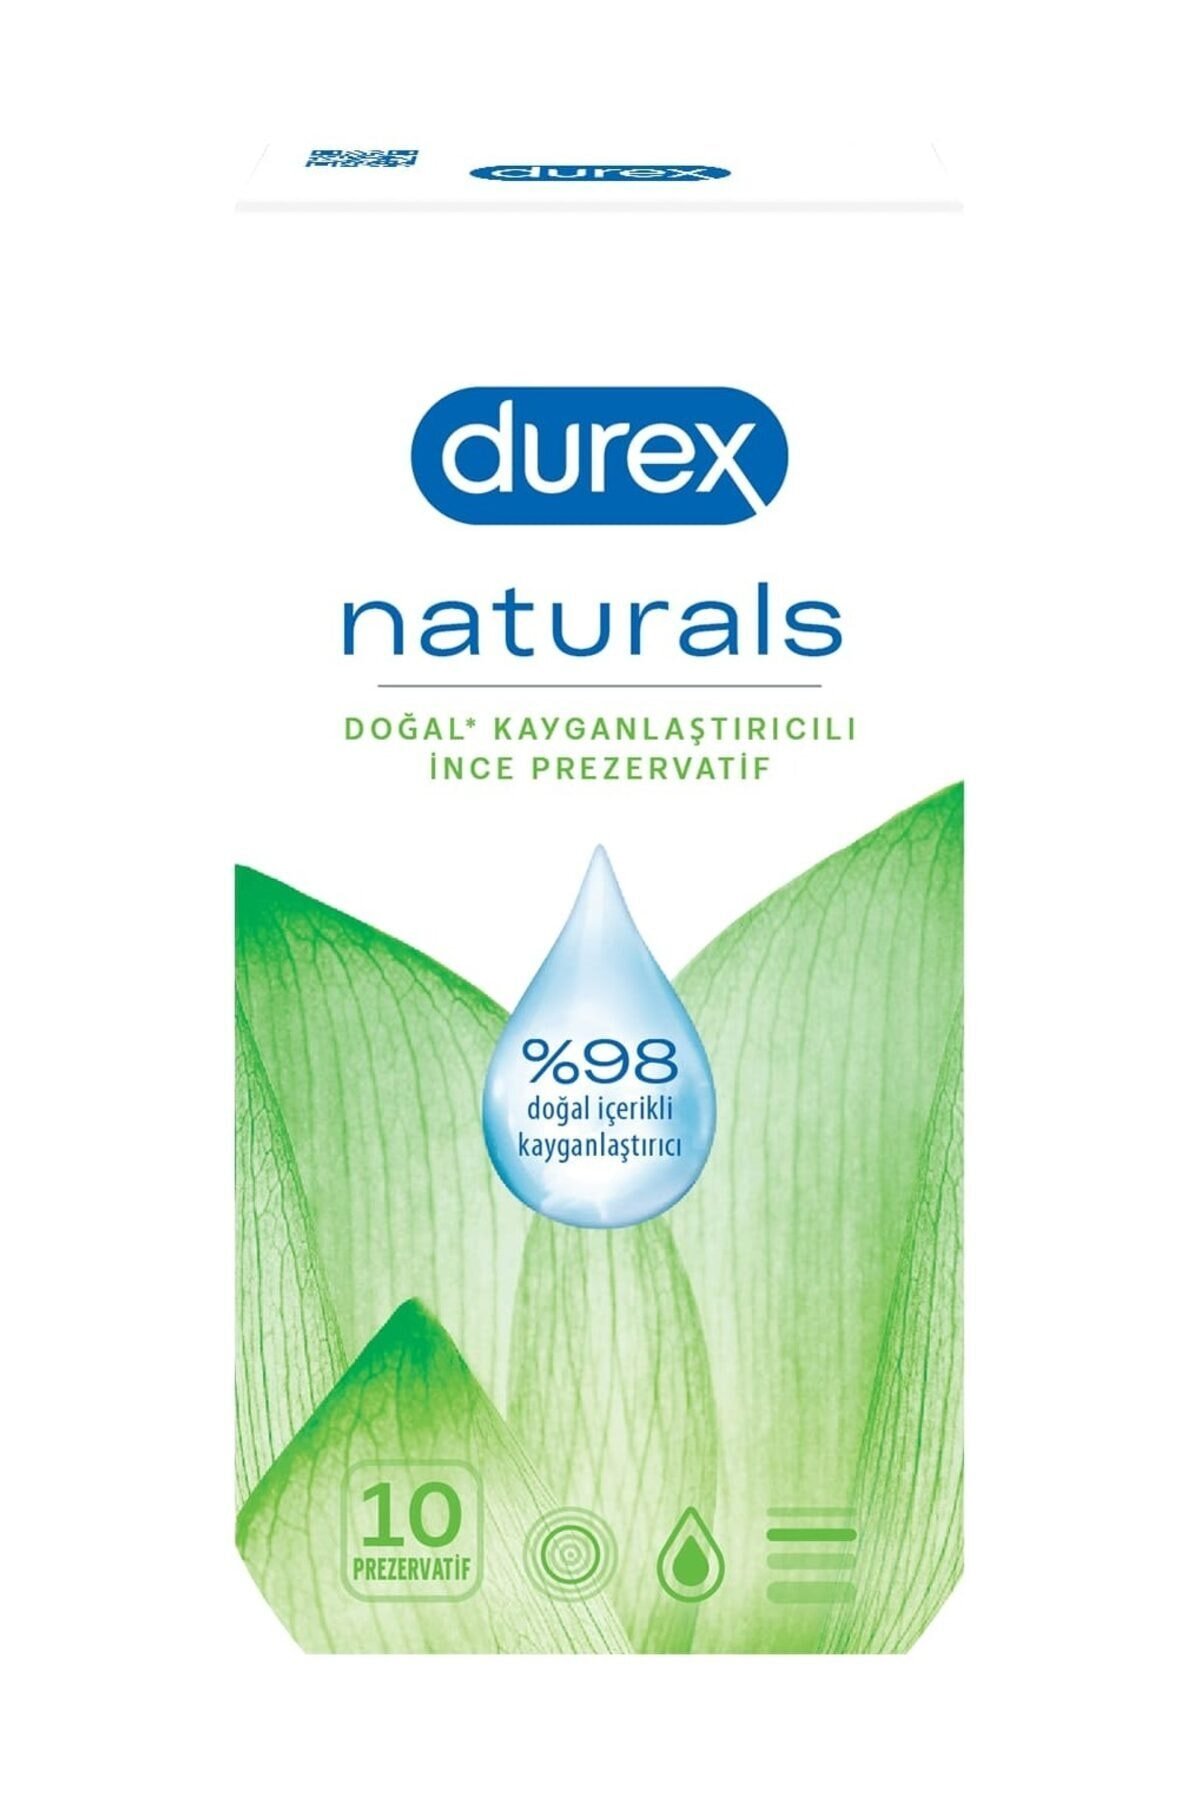 Durex Naturals Prezervatif 10'lu